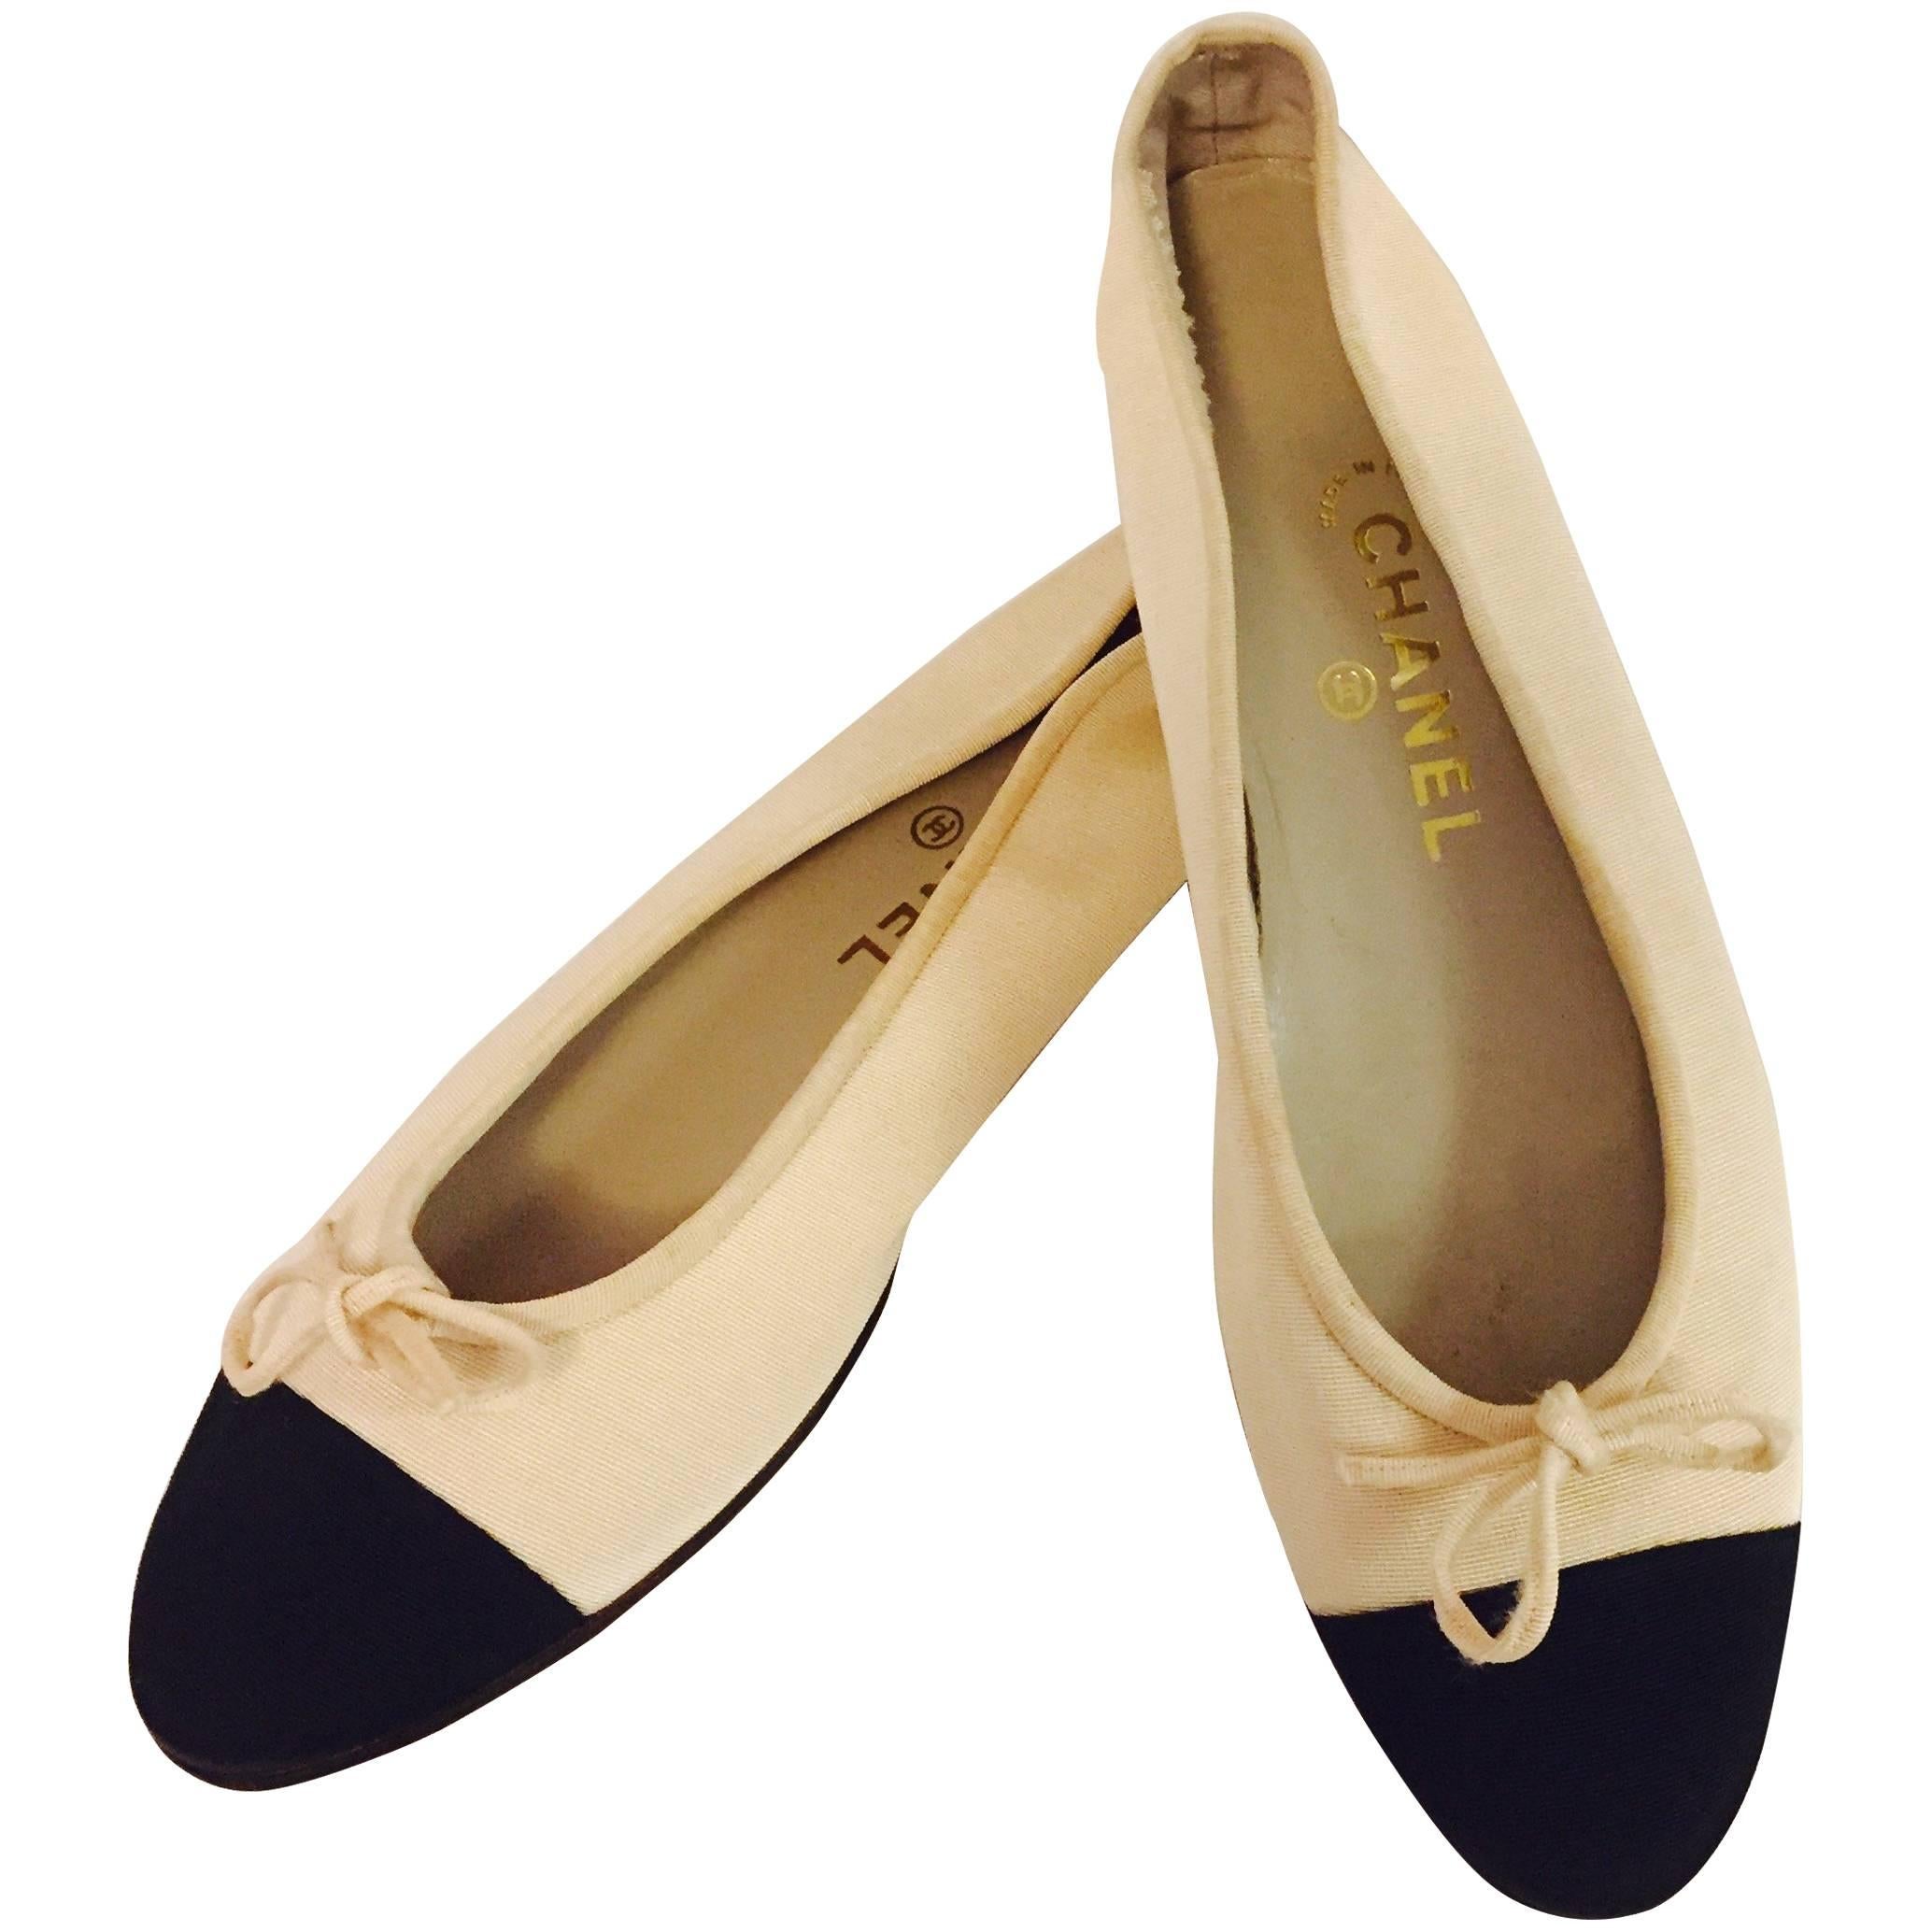 Creative Chanel Beige & Black Grosgrain Ballerina Slippers